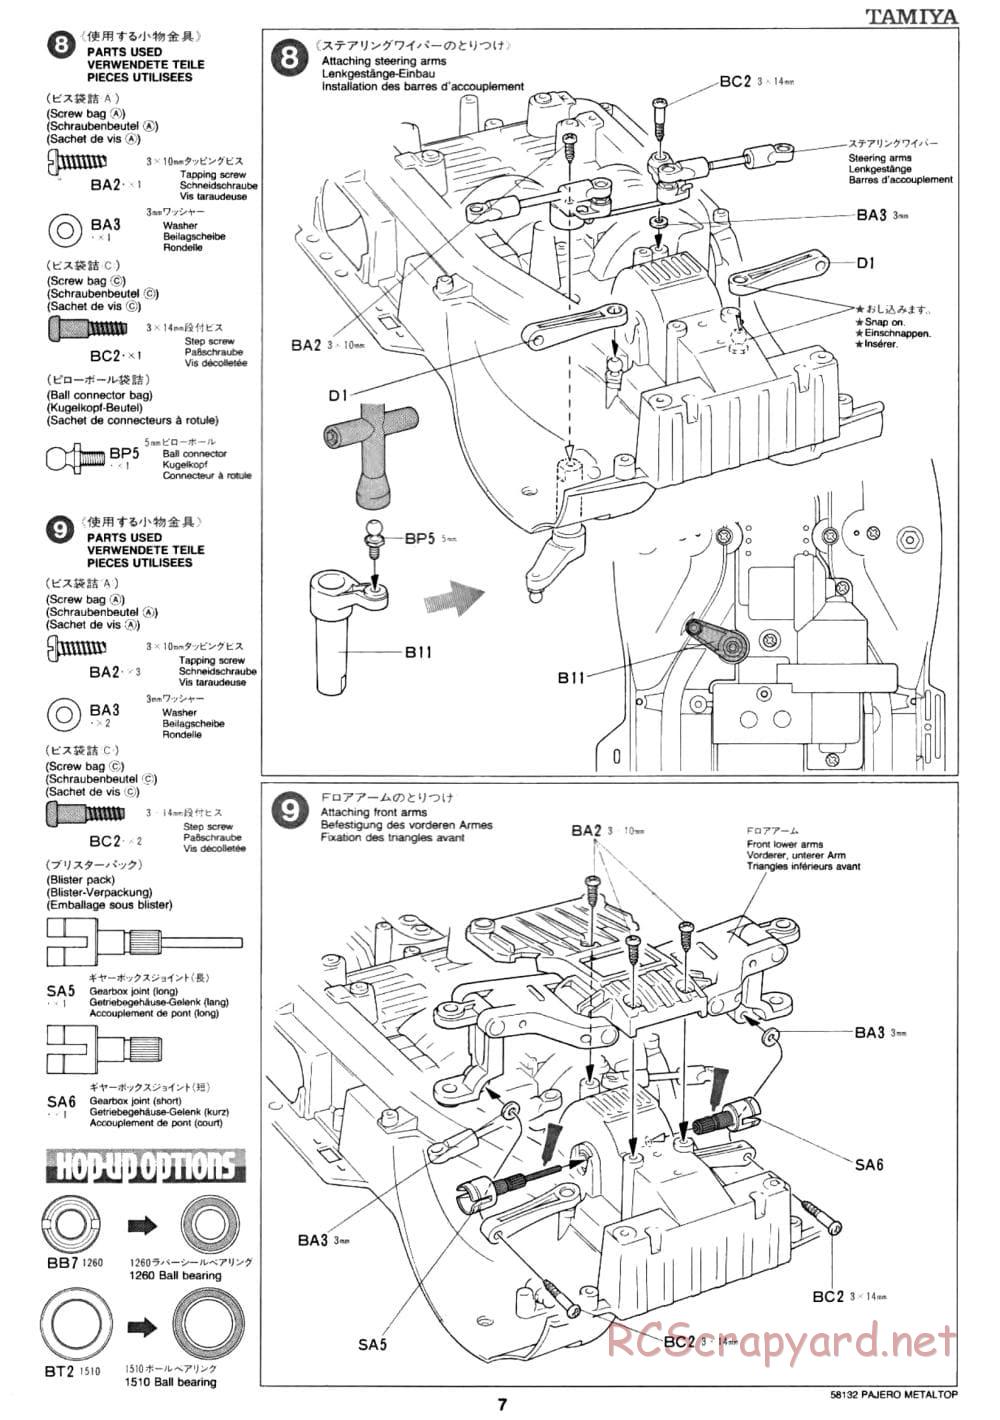 Tamiya - Mitsubishi Pajero Metaltop Wide - CC-01 Chassis - Manual - Page 7